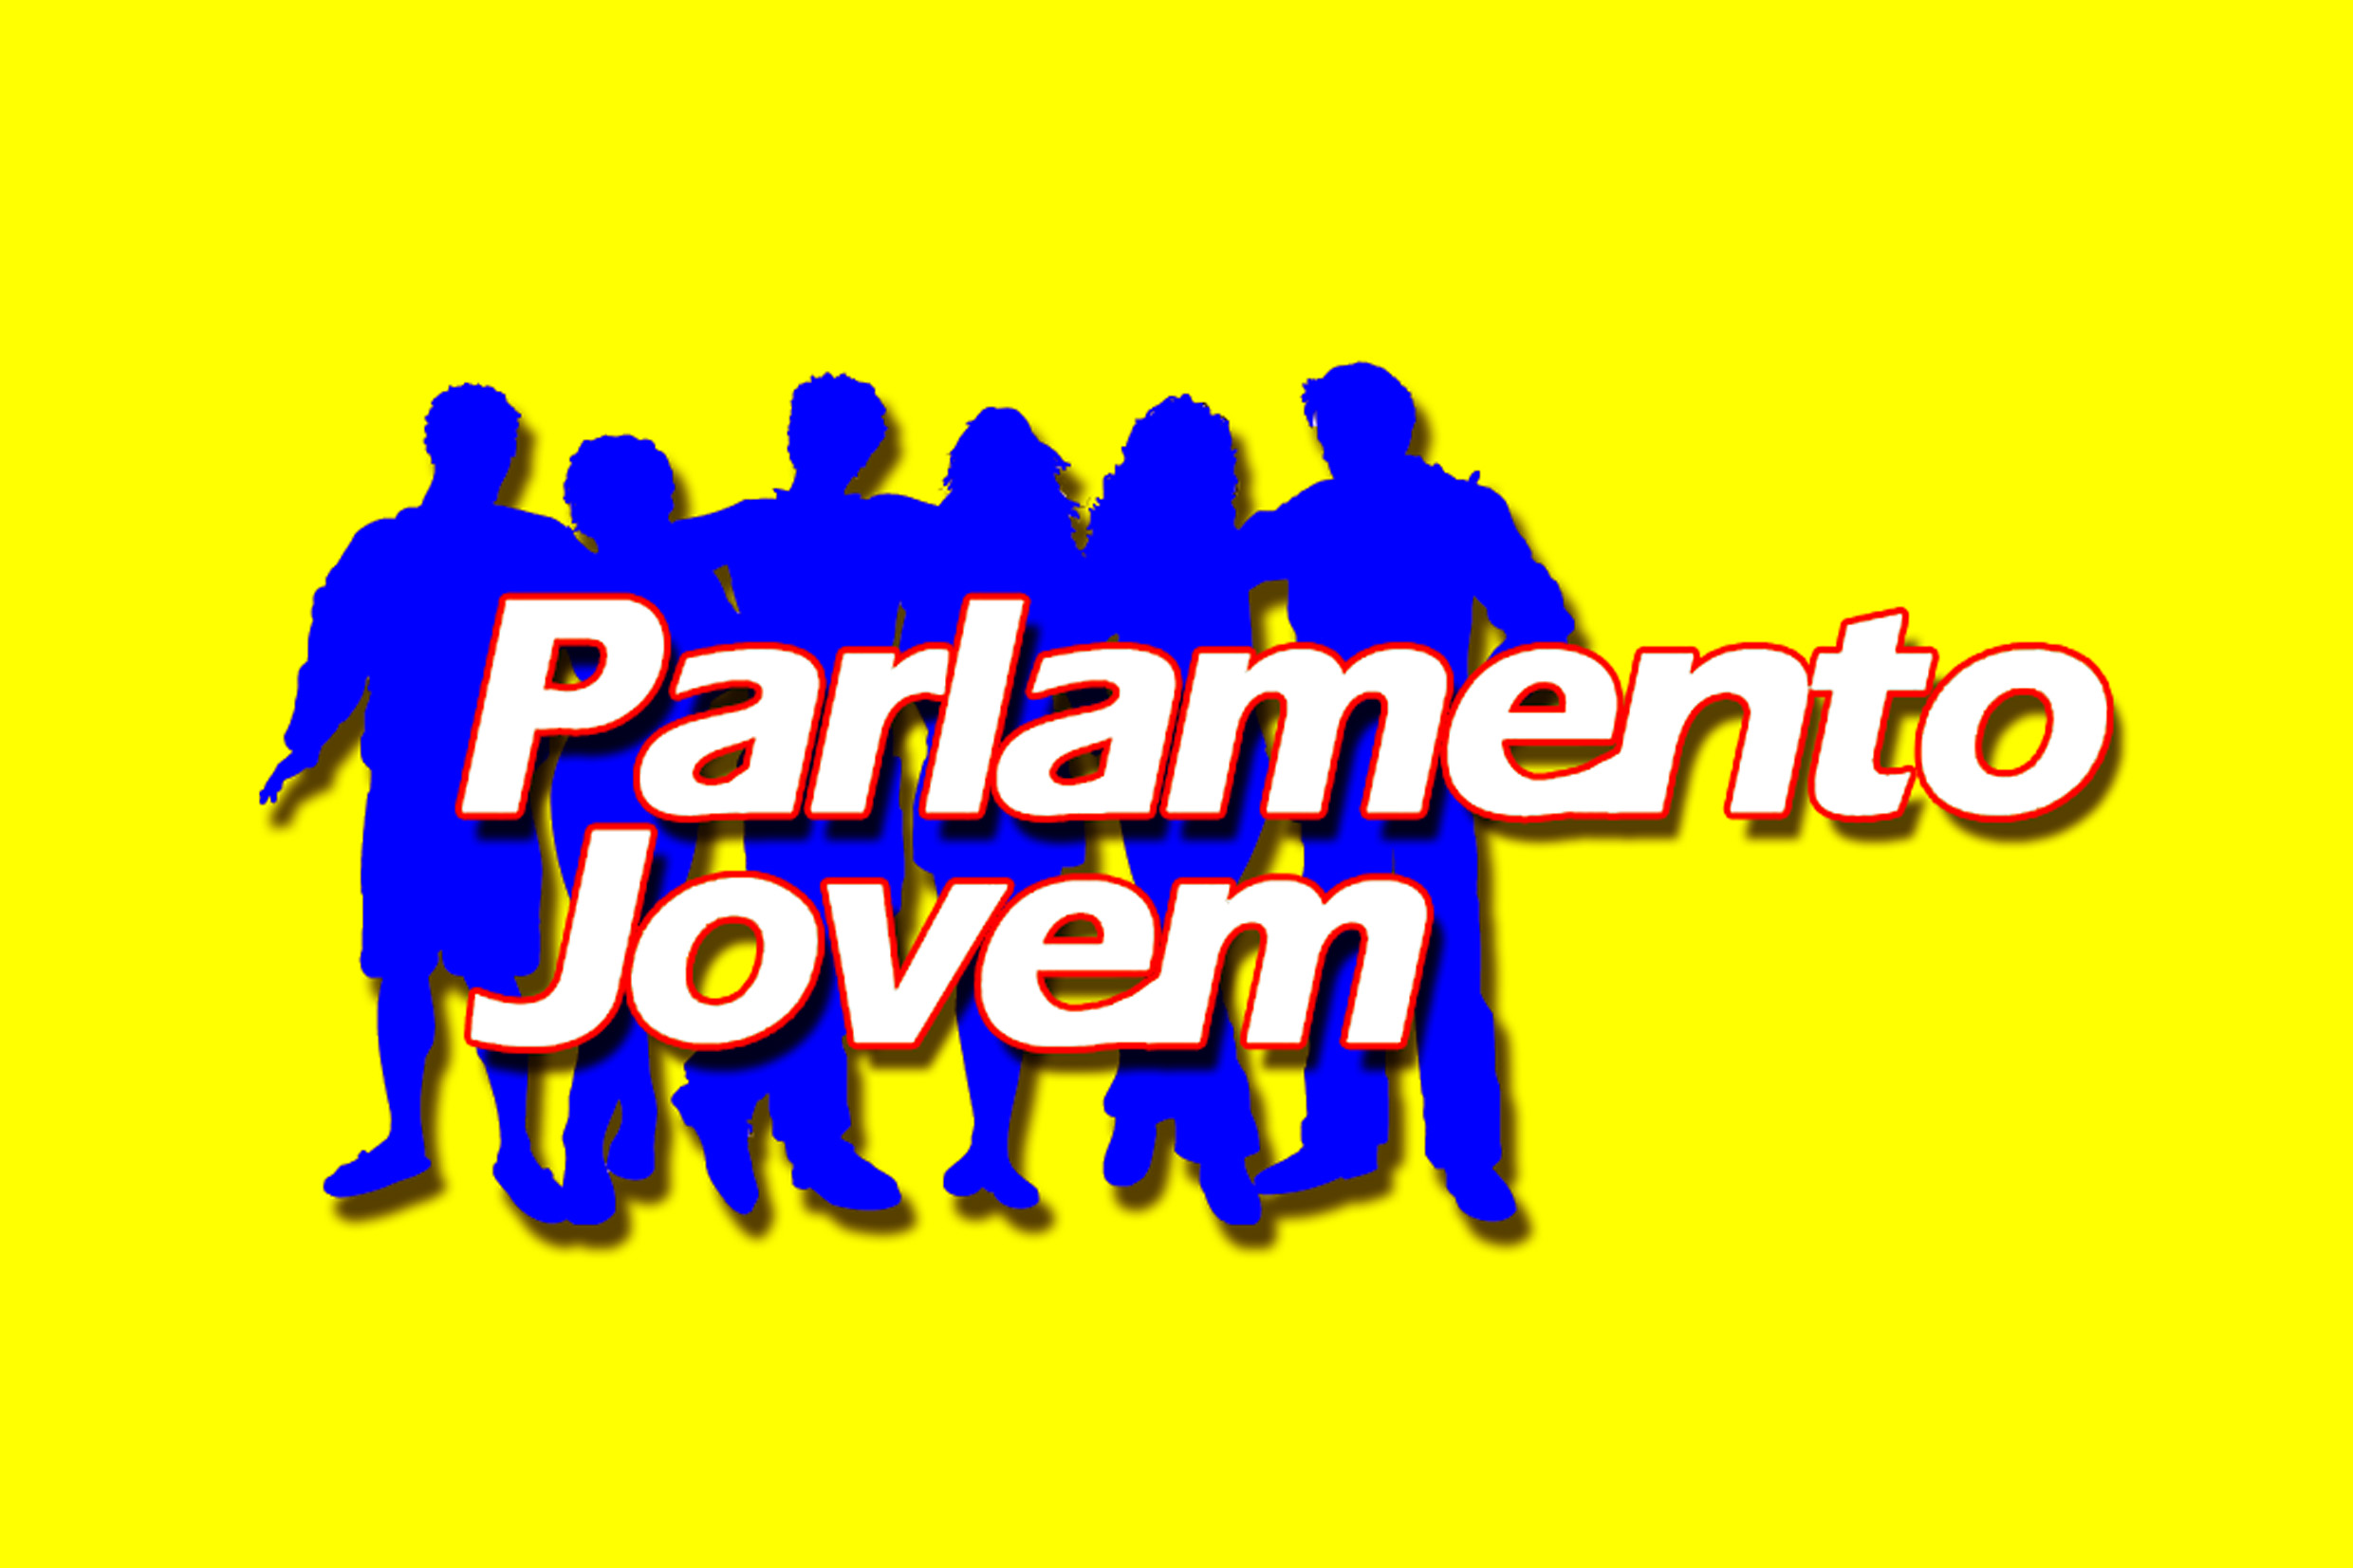 Parlamento Jovem <a style='float:right;color:#ccc' href='https://www3.al.sp.gov.br/repositorio/noticia/N-12-2016/fg198011.jpg' target=_blank><i class='bi bi-zoom-in'></i> Clique para ver a imagem </a>